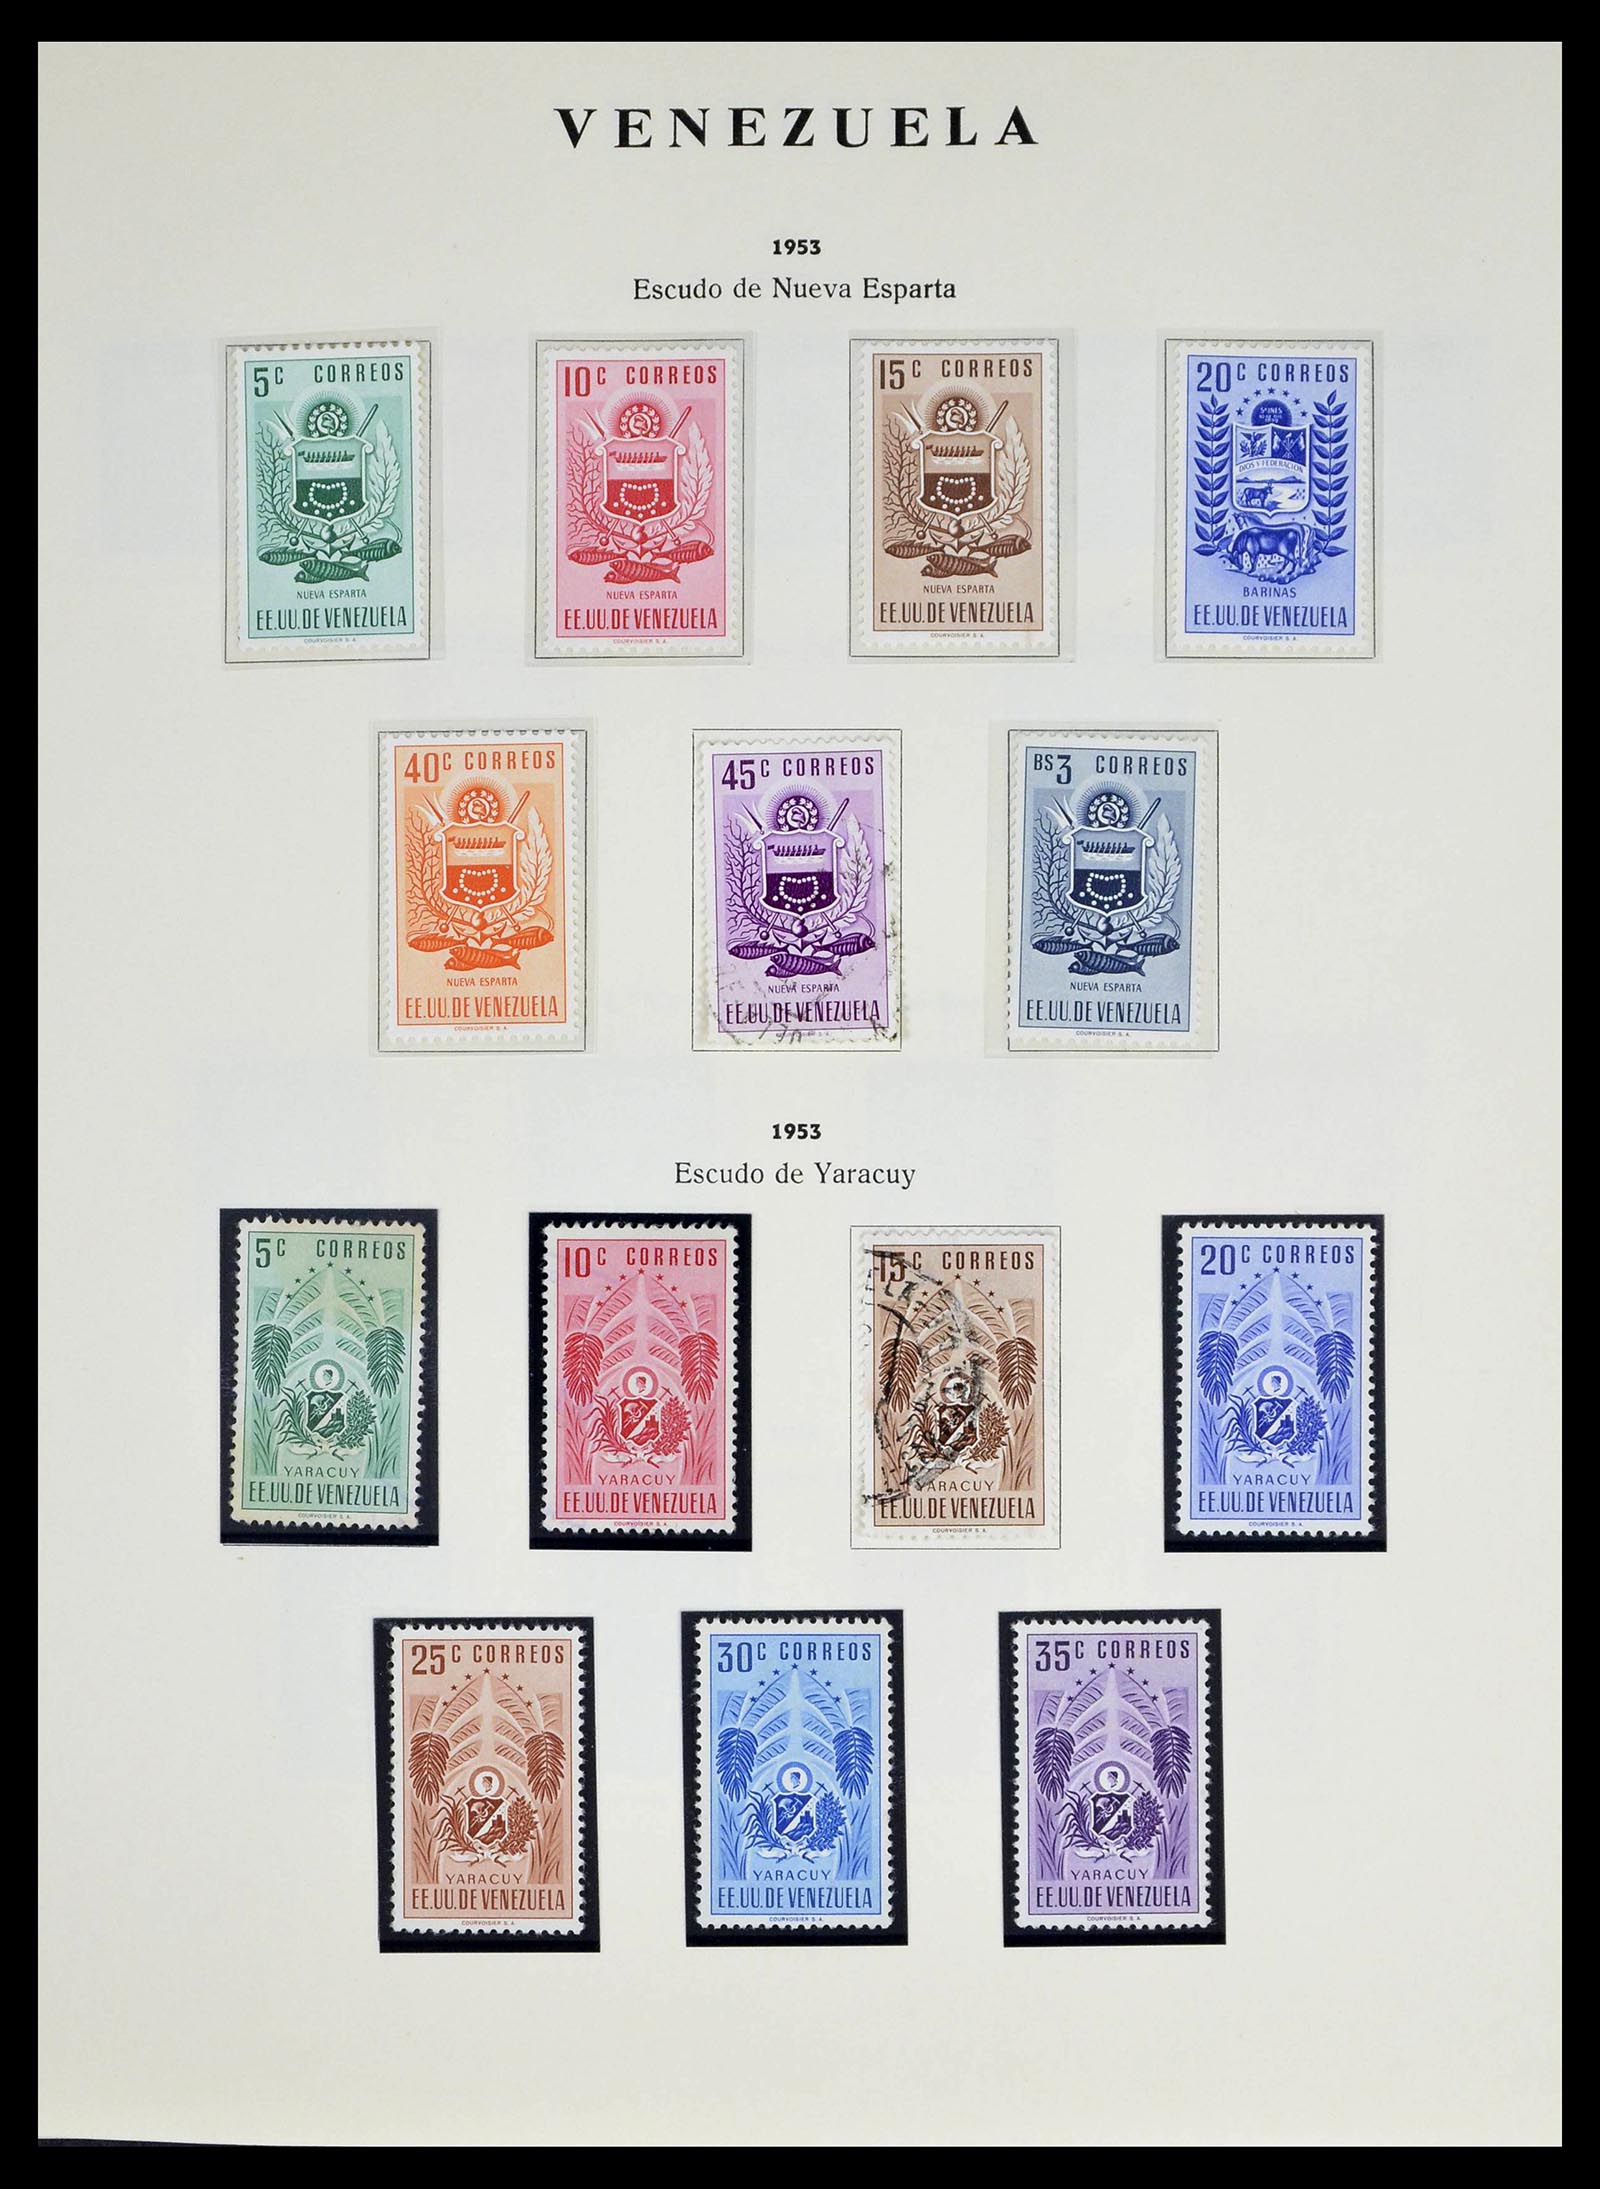 39223 0036 - Stamp collection 39223 Venezuela 1859-1984.